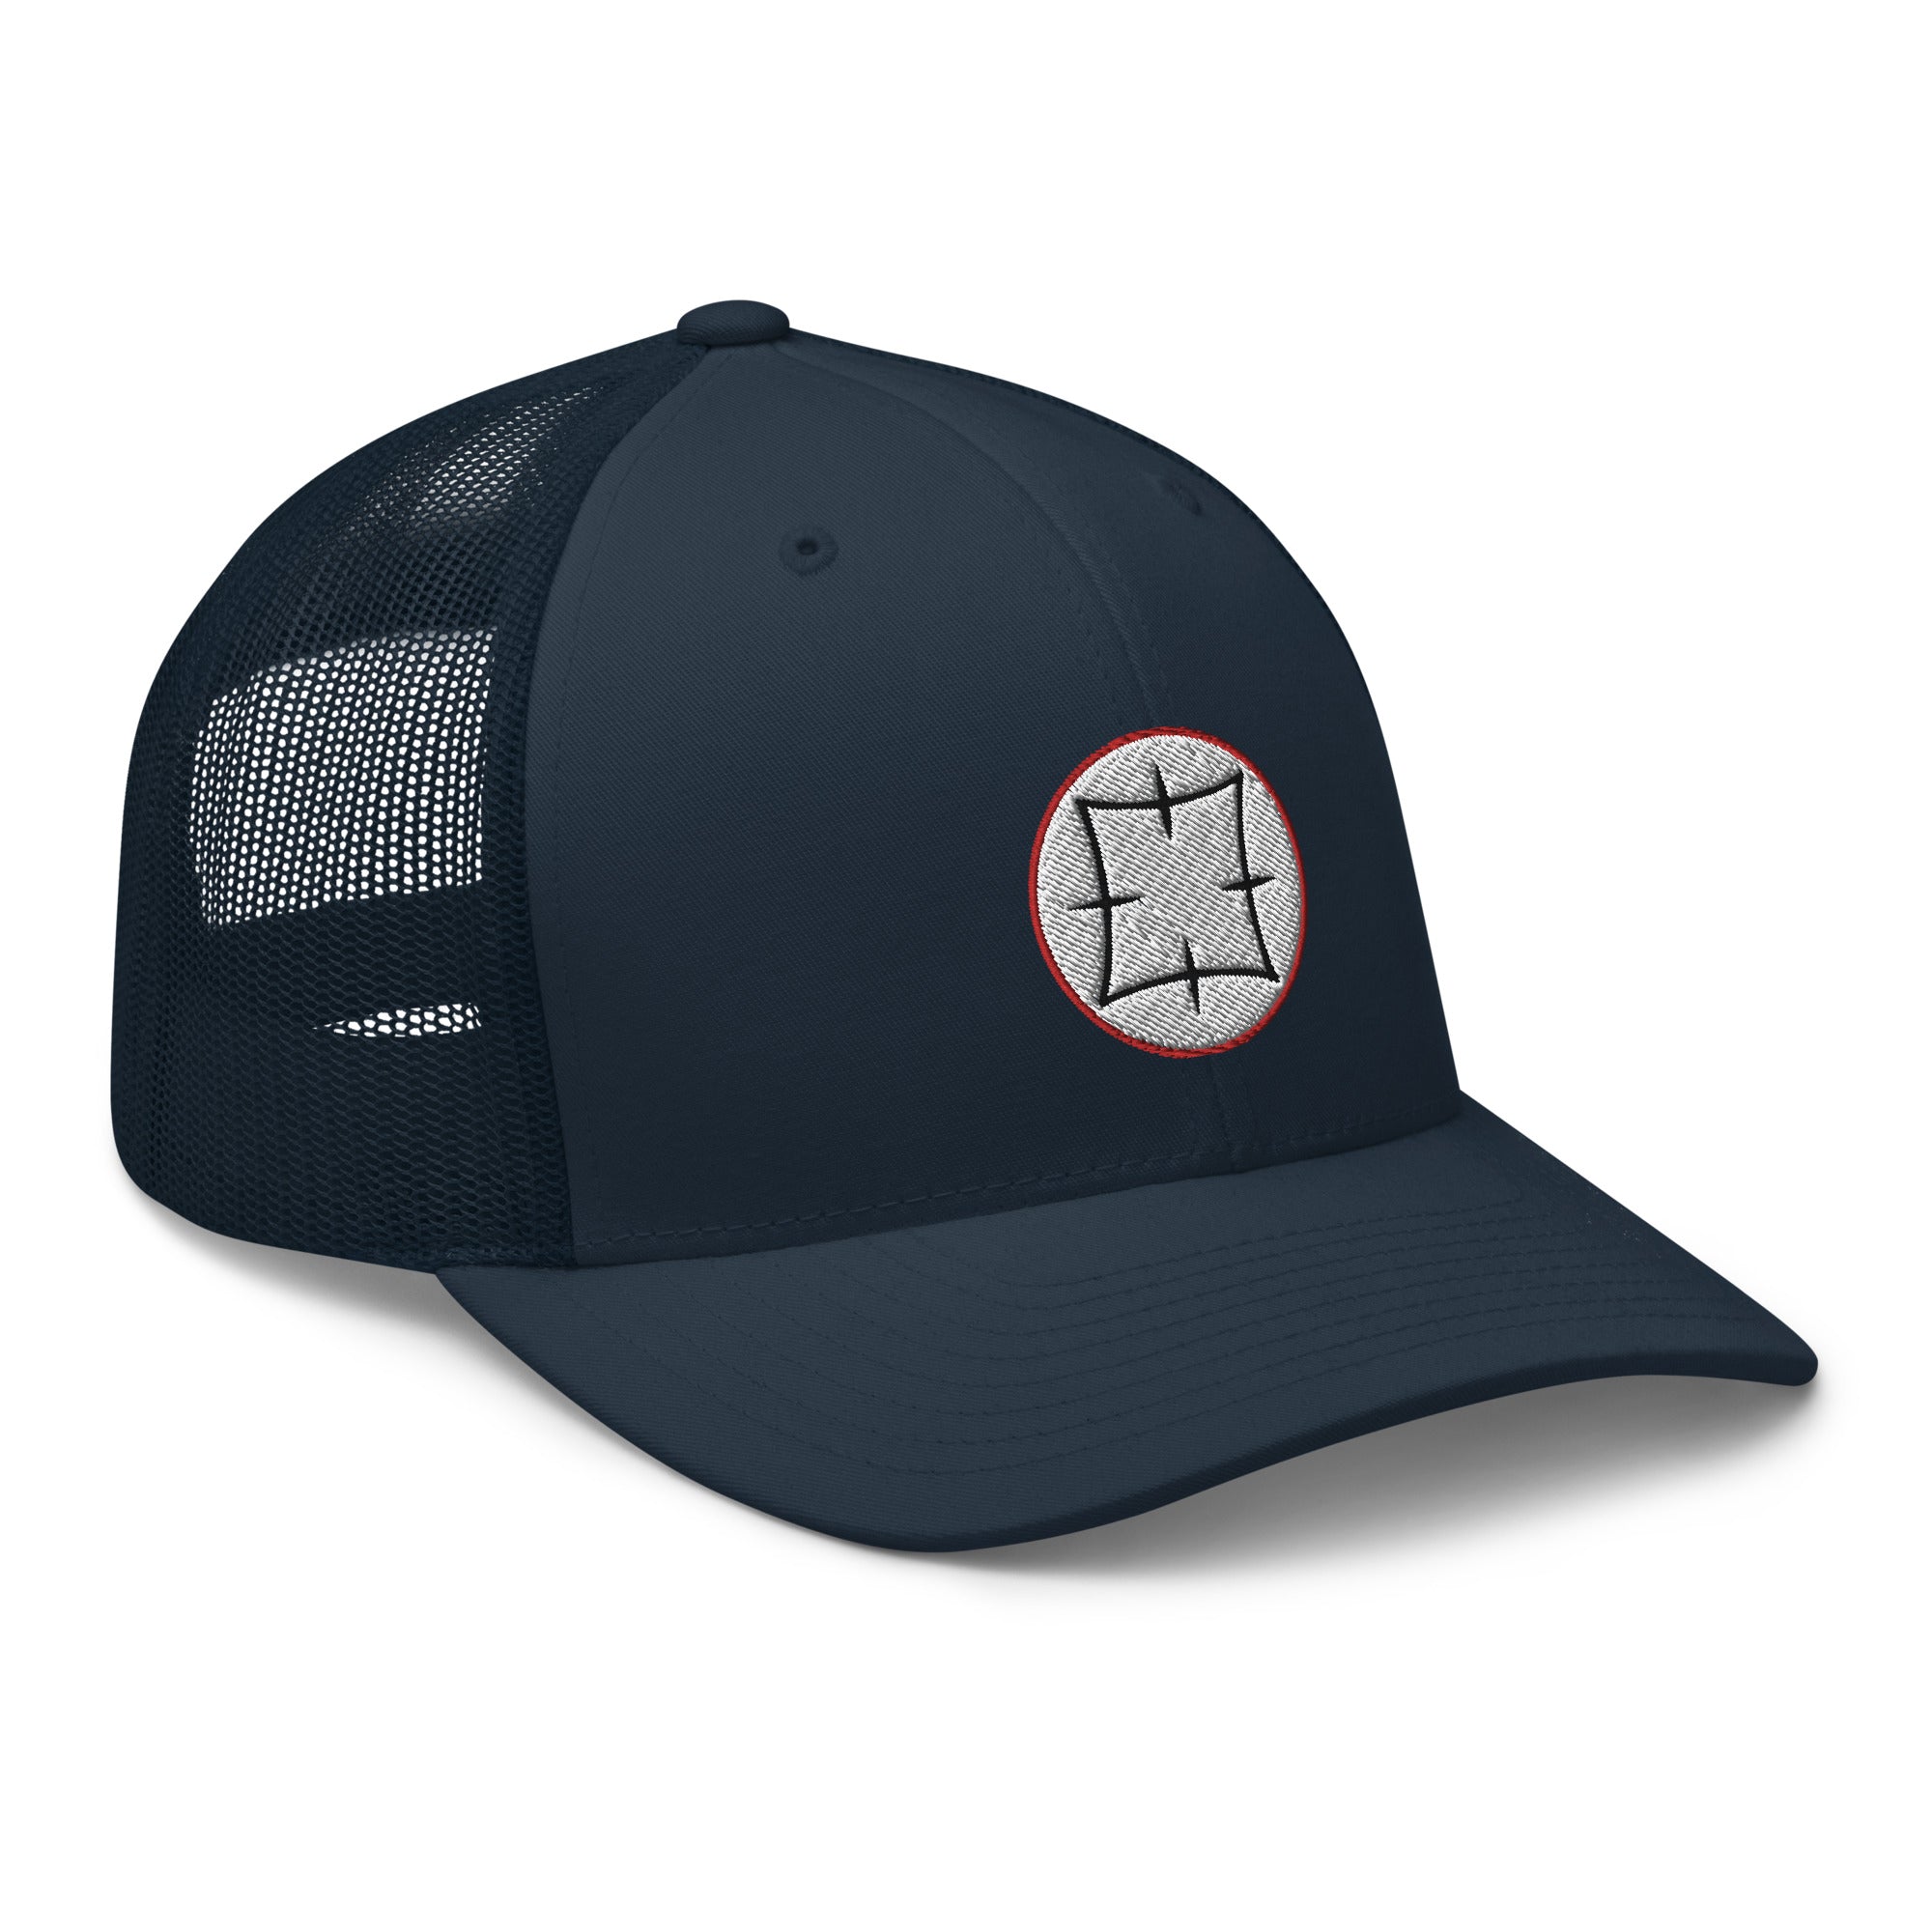 Ancient Japanese Symbol Embroidered Samurai Trucker Cap Snapback Hat